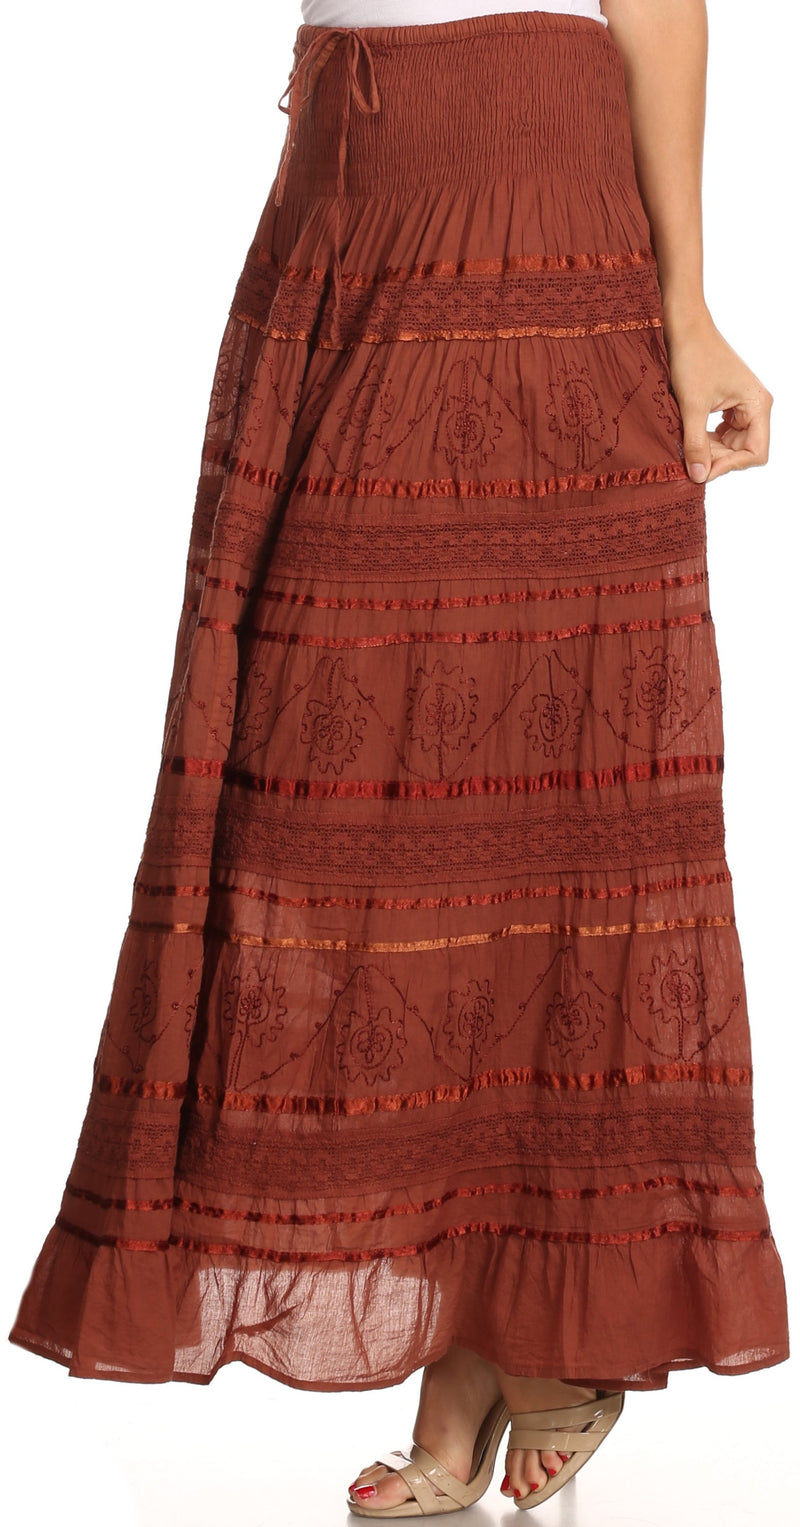 Sakkas Lace and Ribbon Peasant Boho Skirt